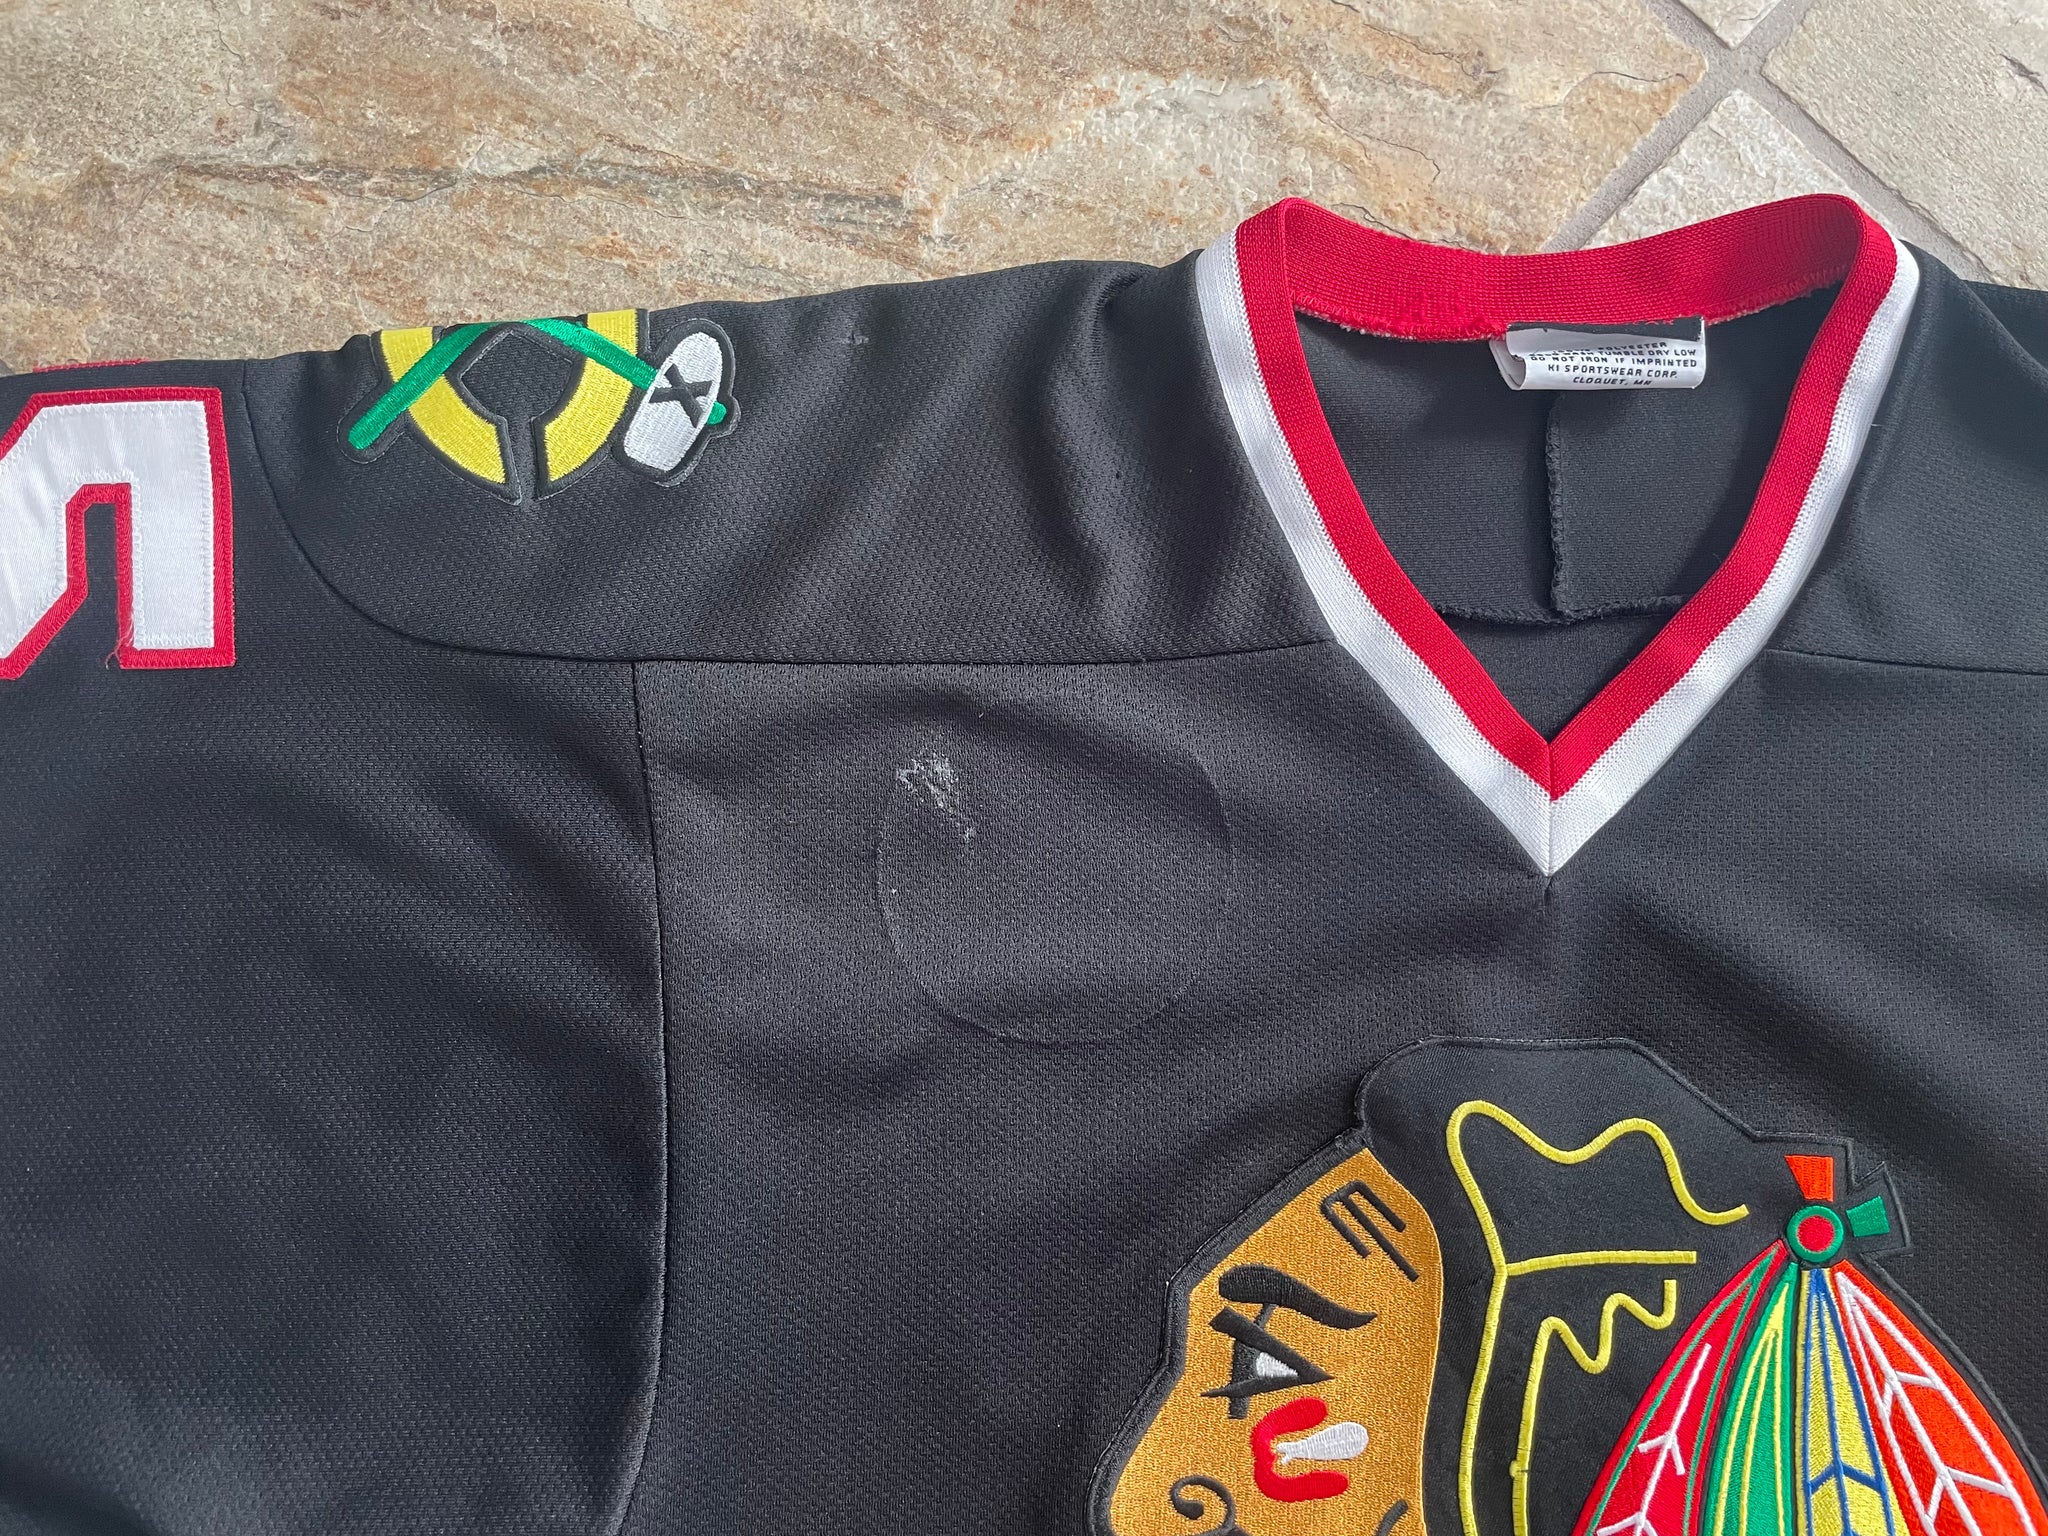 chicago blackhawks black jersey